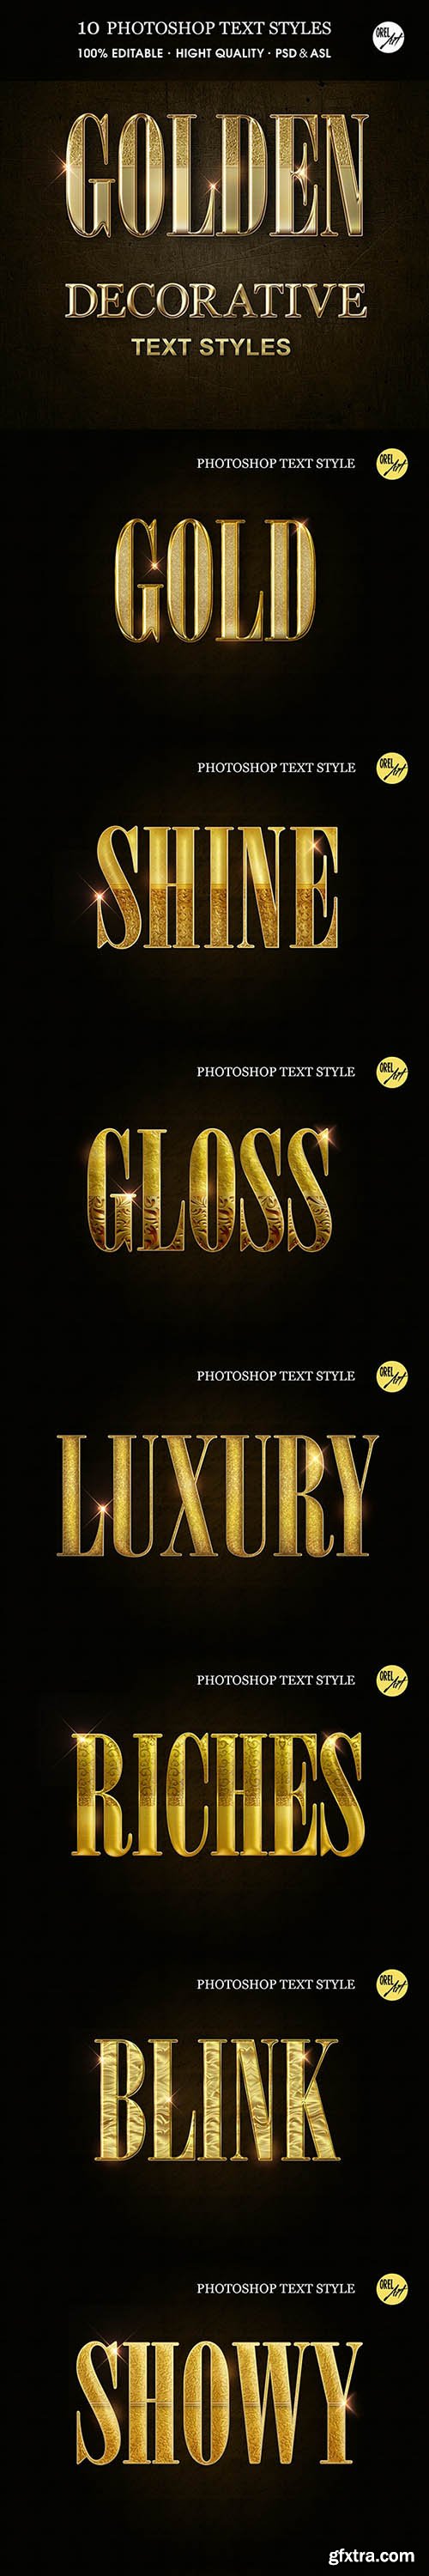 GraphicRiver - Golden Decorative Text Styles 30375826